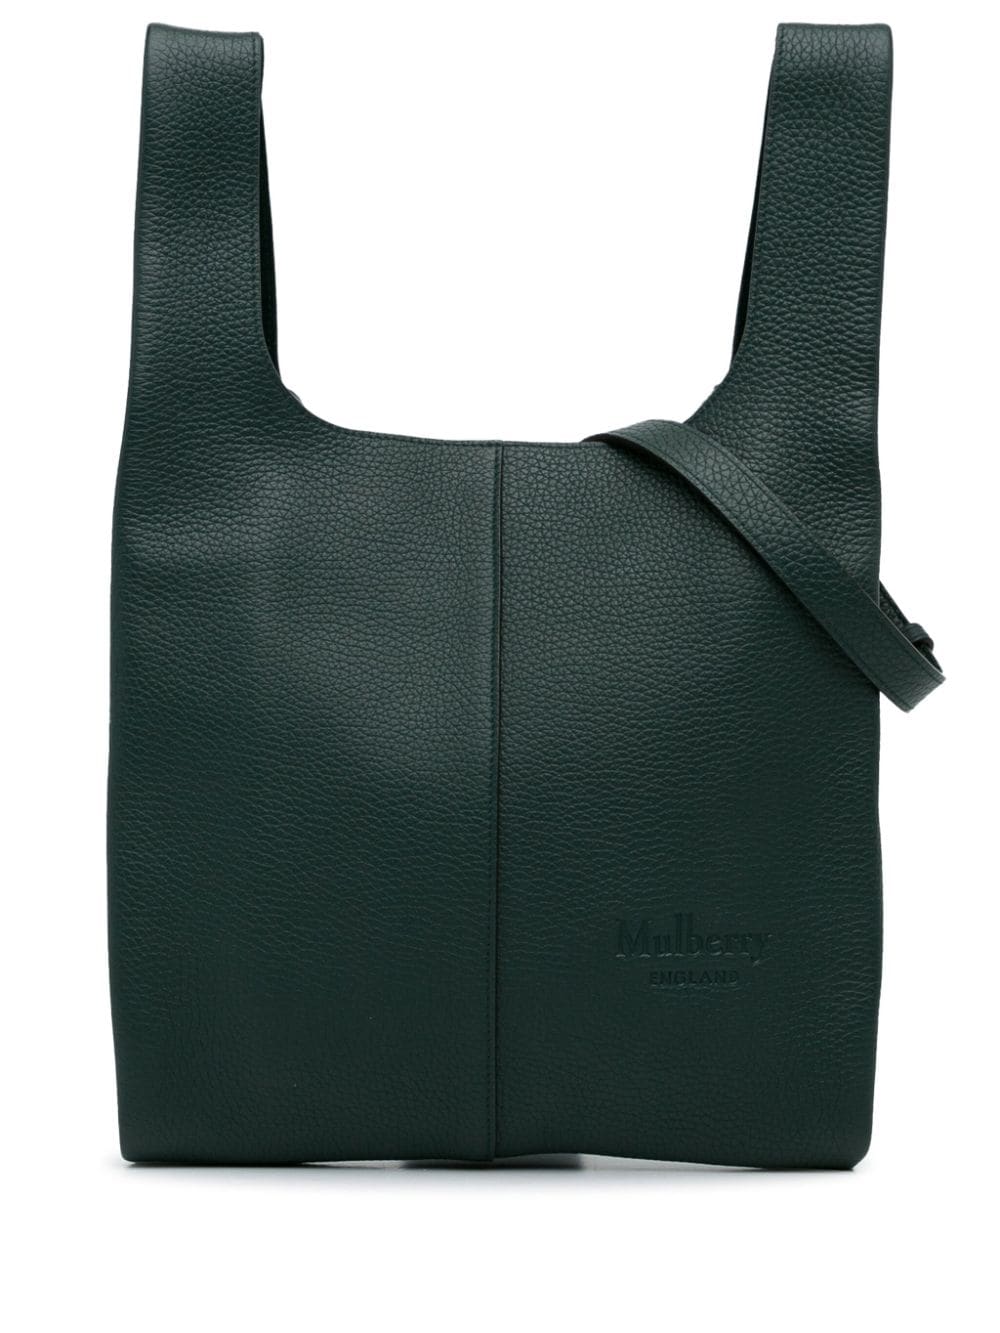 Mulberry pre-owned Portobello leather tote bag - Green von Mulberry